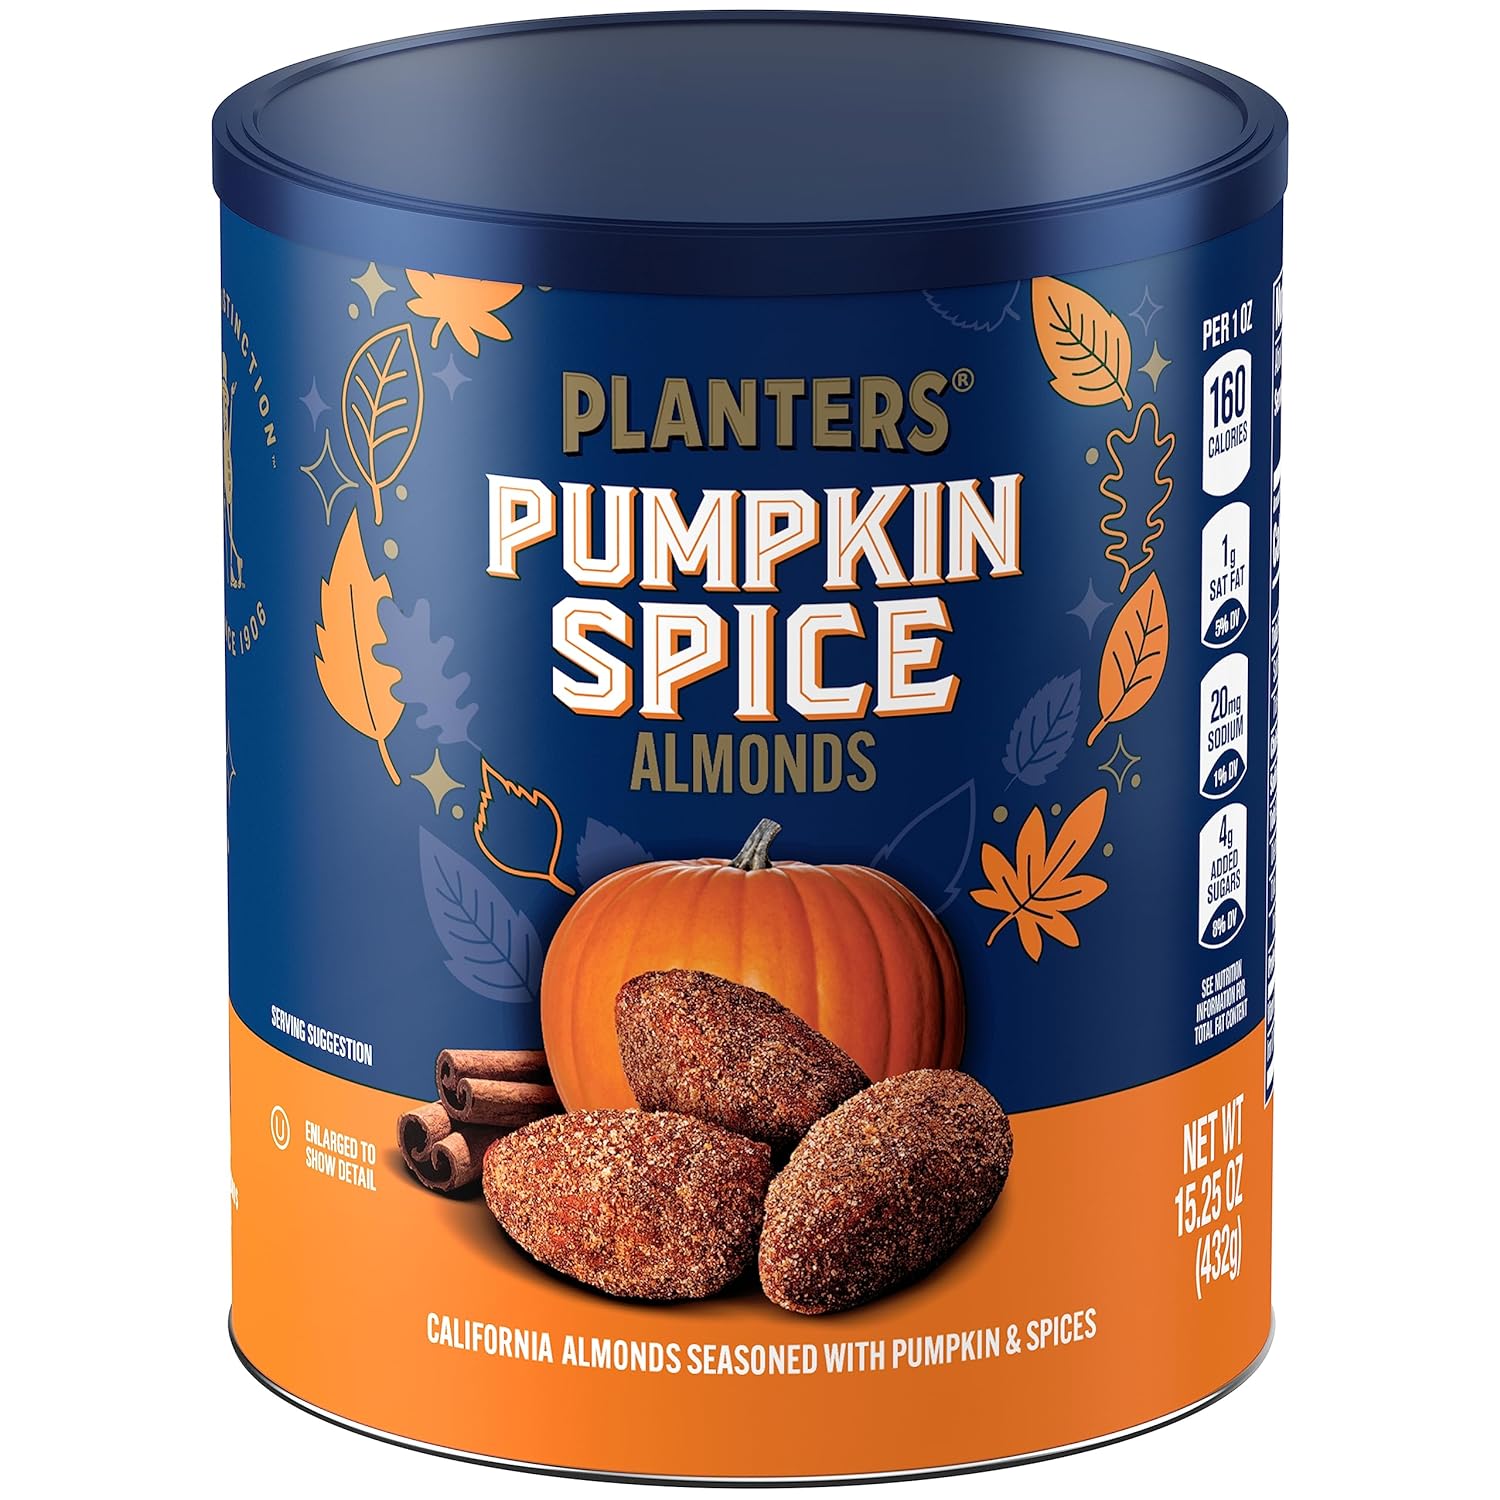 15.25-Oz Planters Pumpkin Spice Almonds $5.60 w/ S&S + Free Shipping w/ Prime or $35+